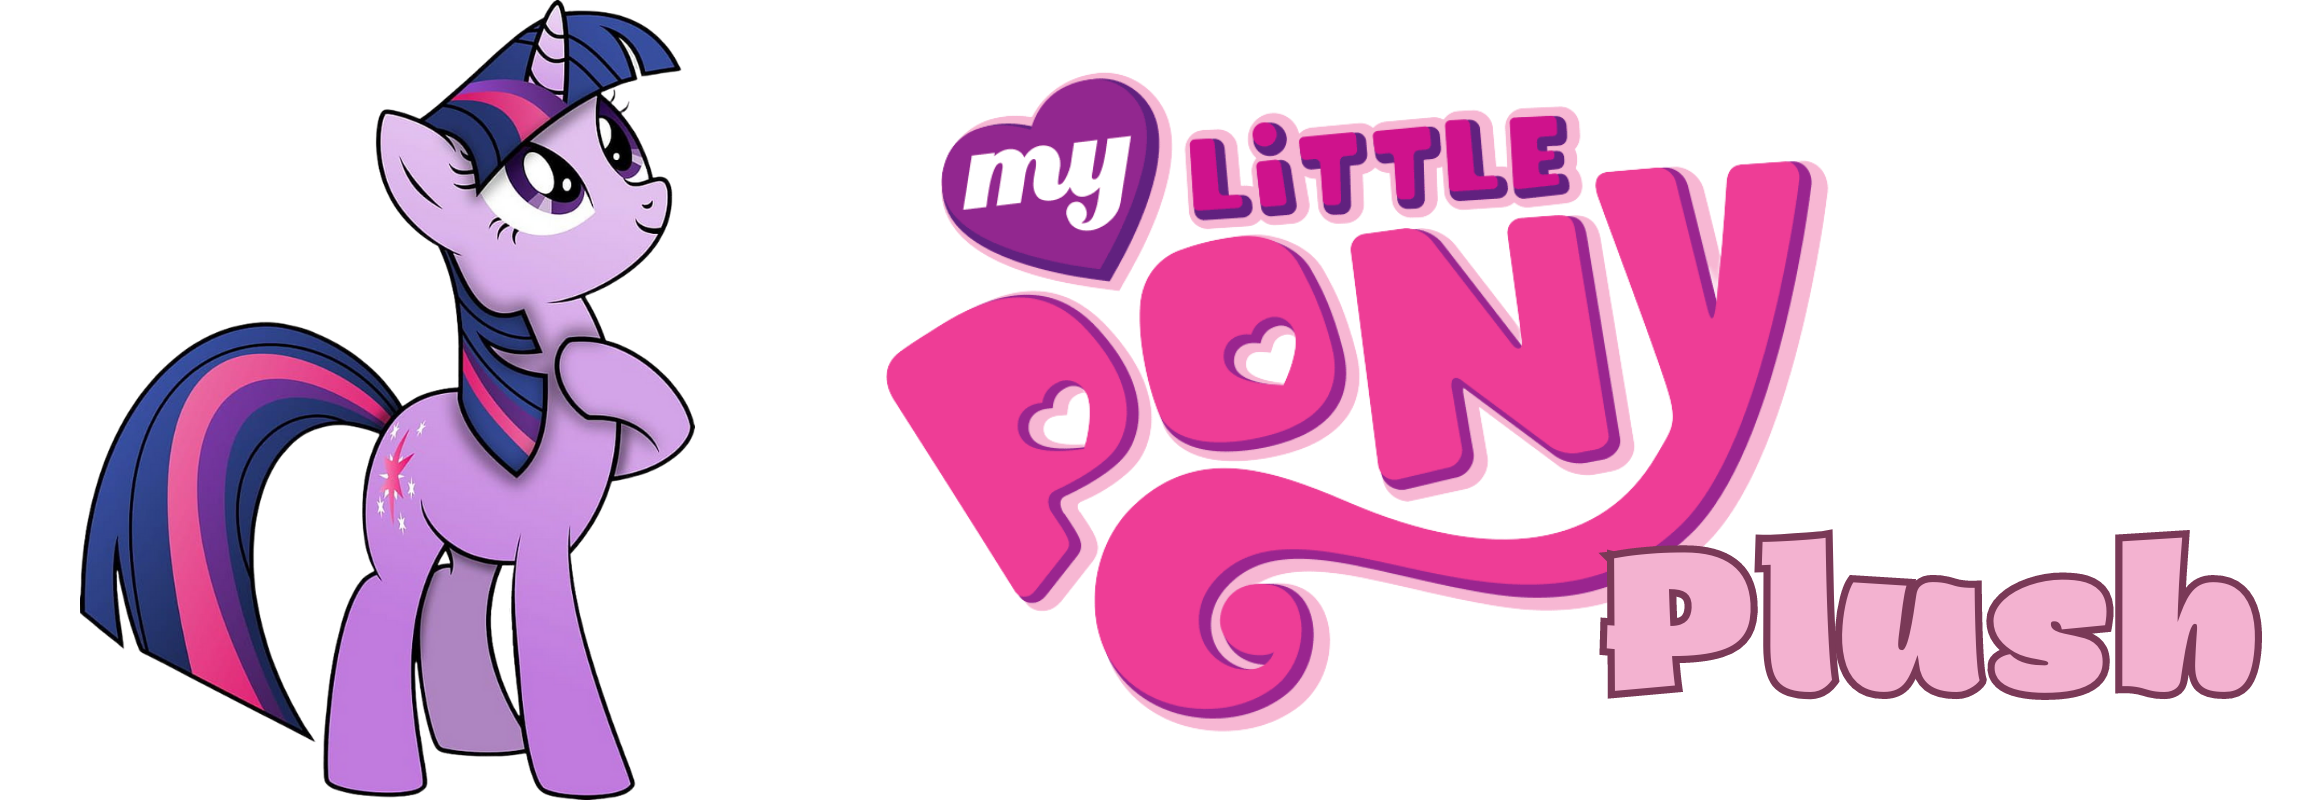 my little pony plush logo1 - My Little Pony Plush